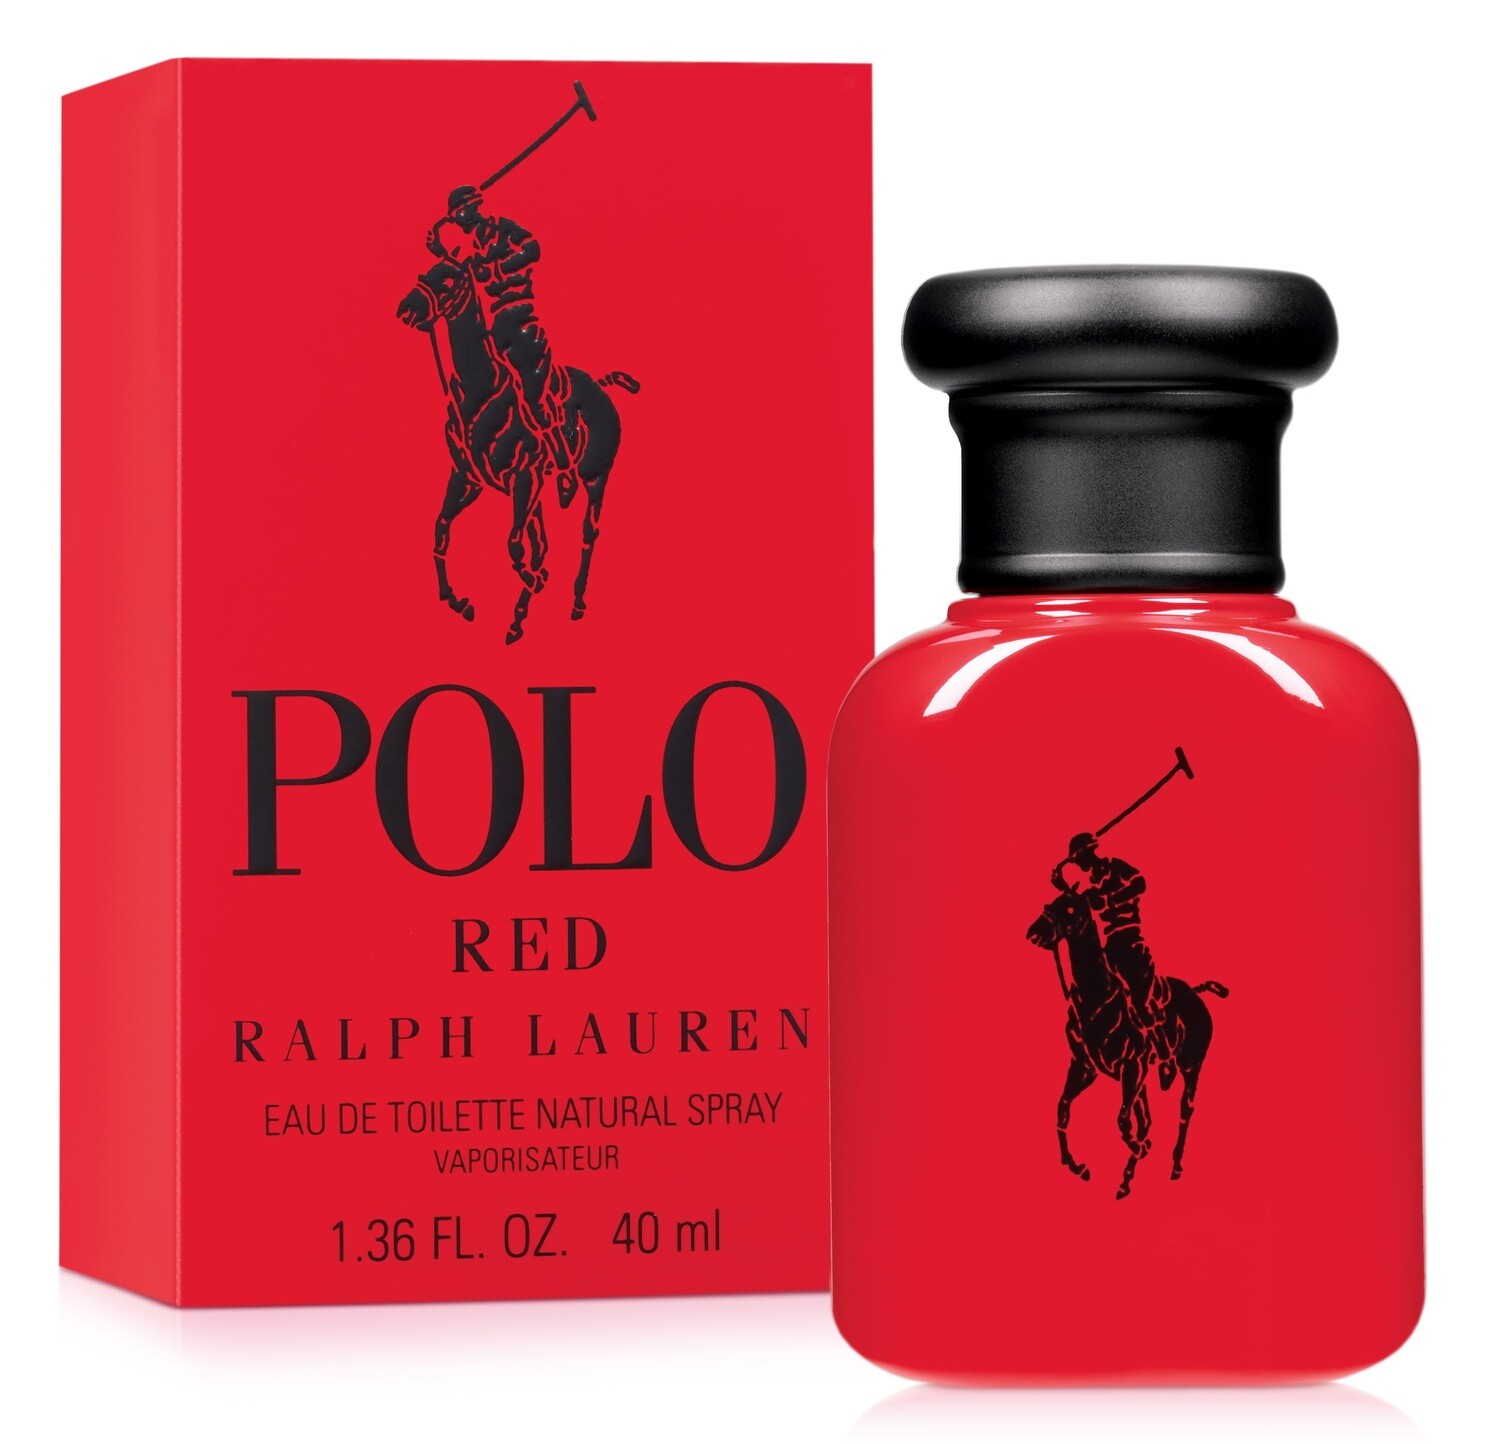 Polo Red - Ralph Lauren